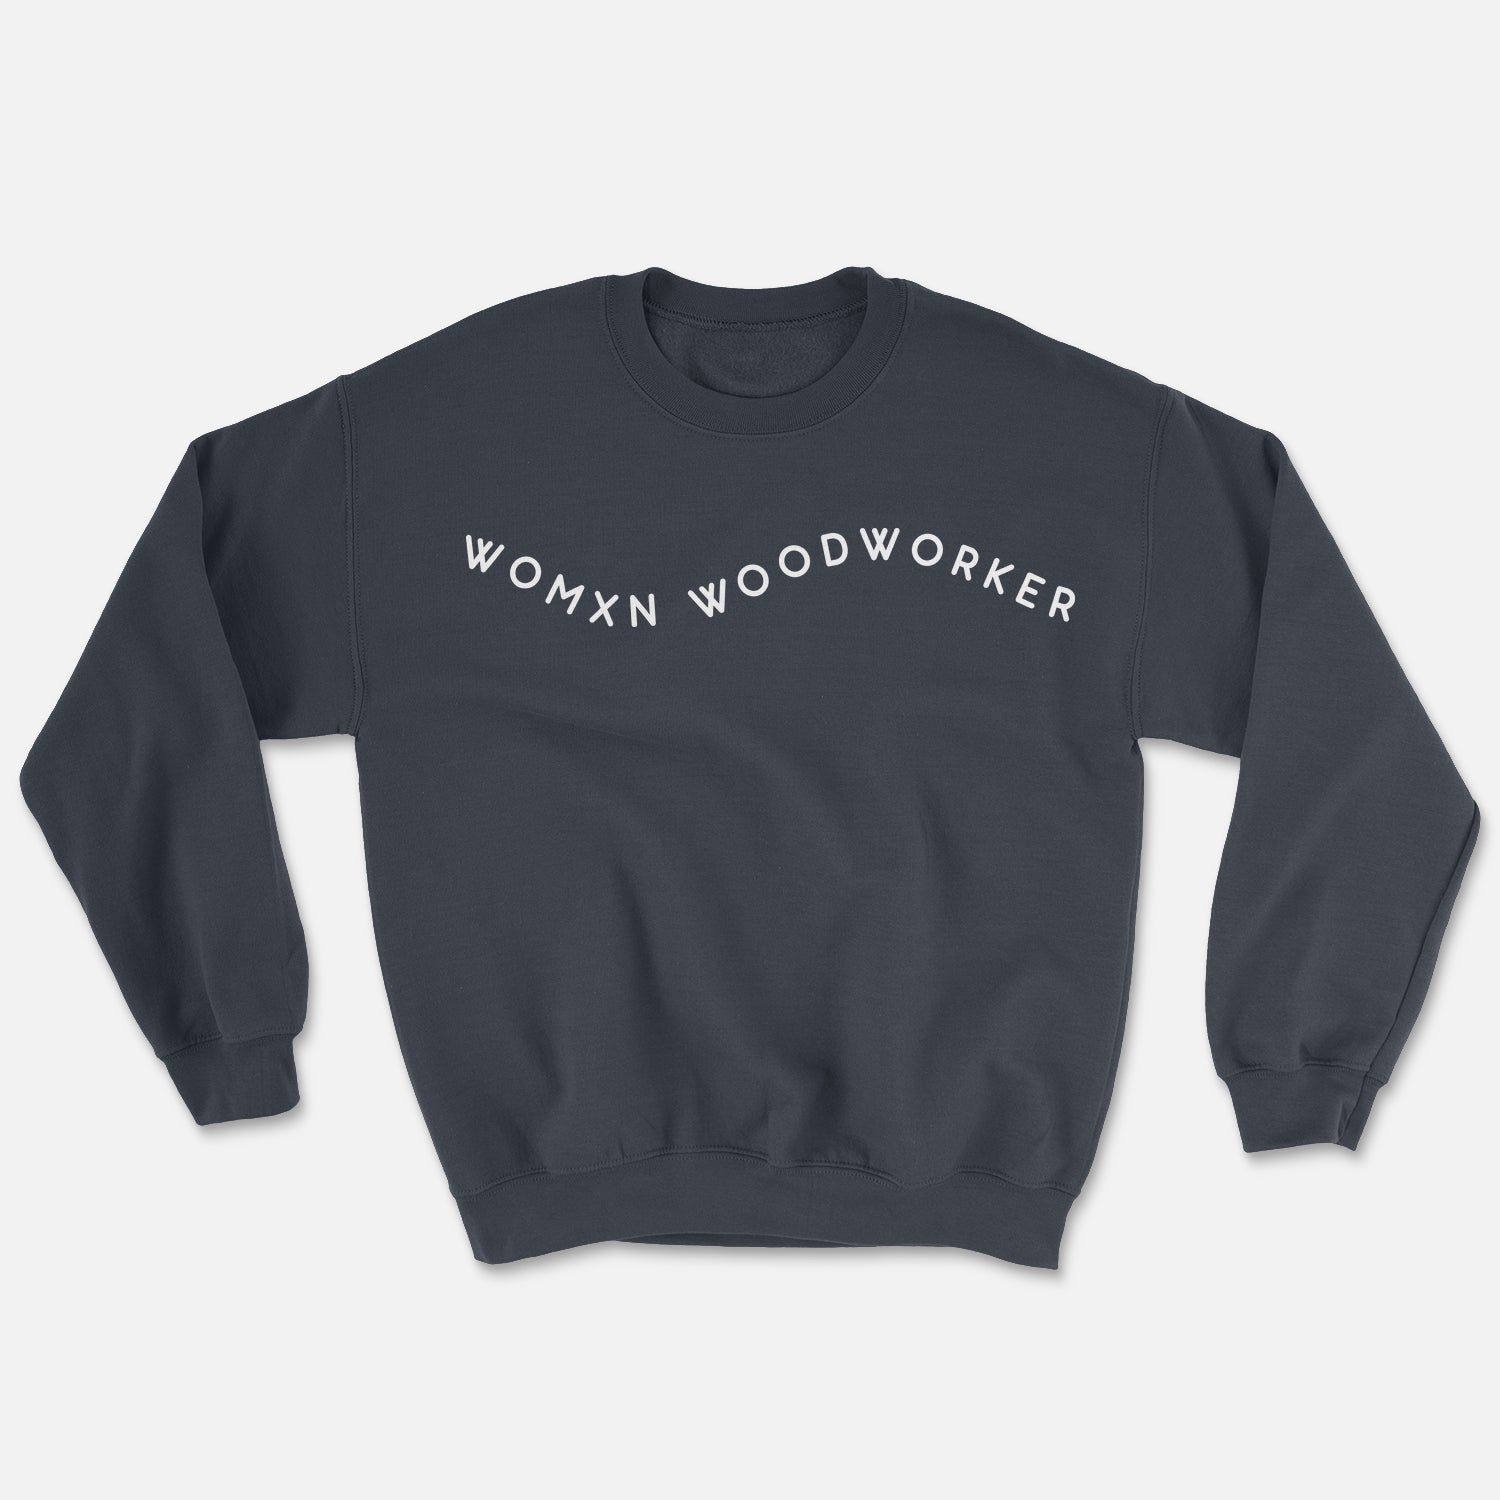 Heather grey crew neck sweatshirt. Reads "Womxn Woodworker" in white font.